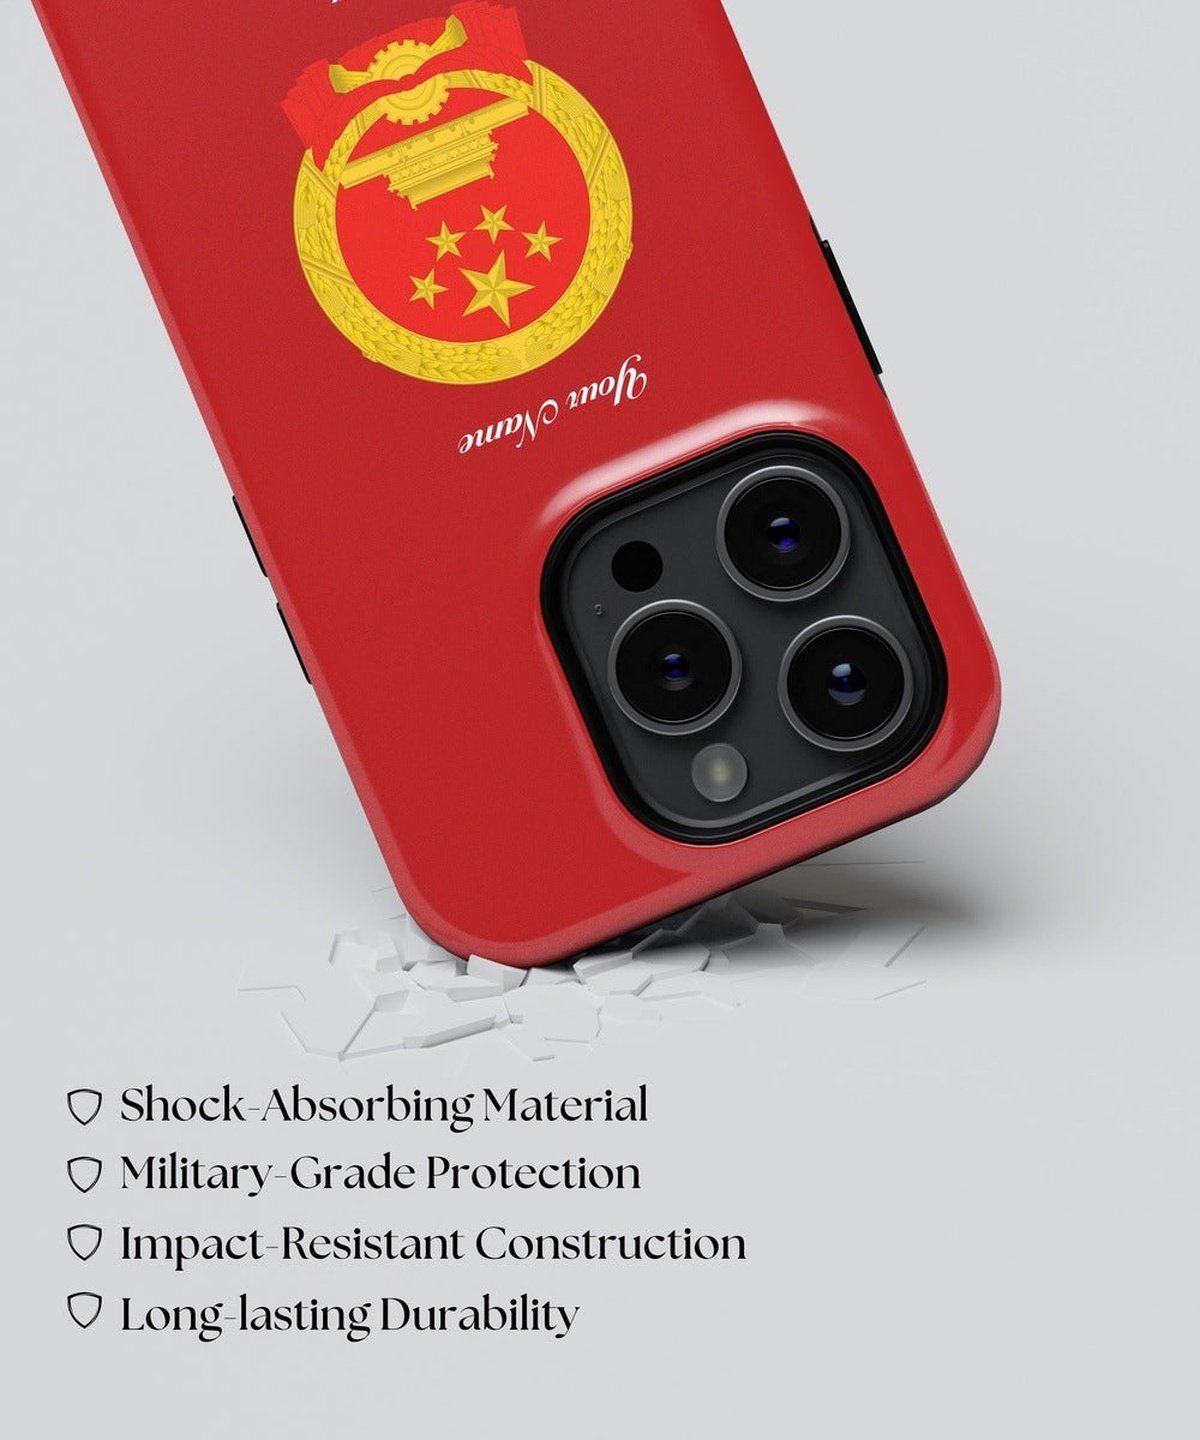 China National Emblem - iPhone